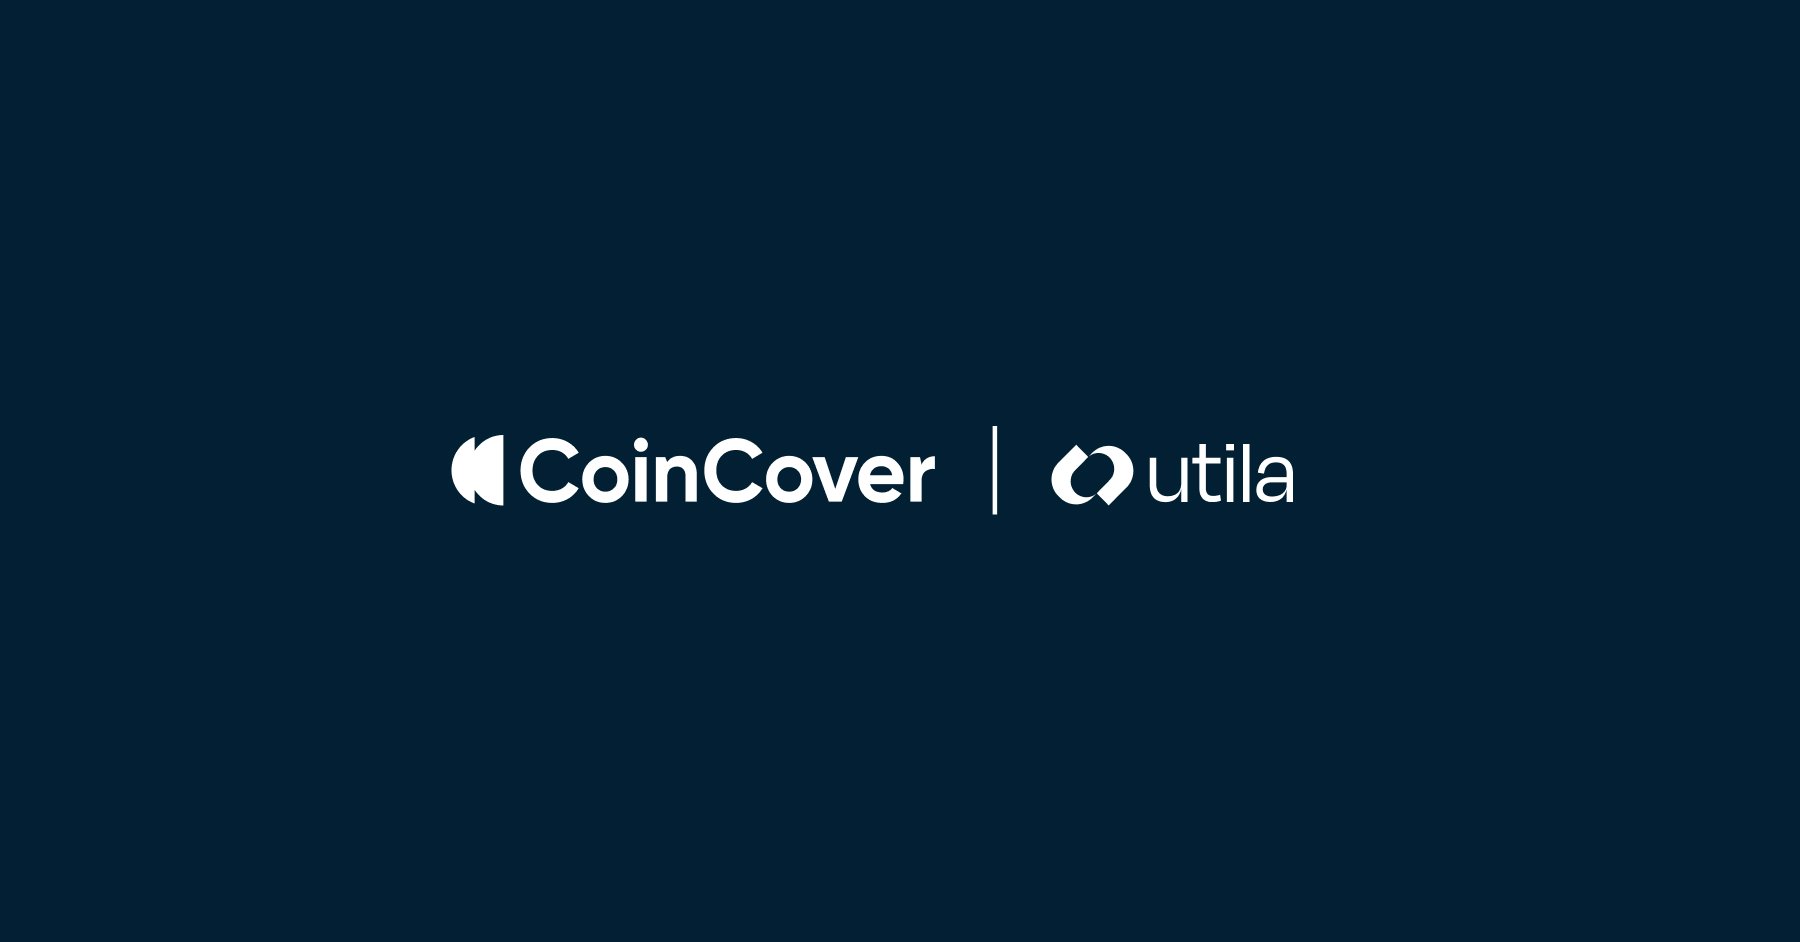 Coincover and Utila Partner to Enhance Crypto Asset Management